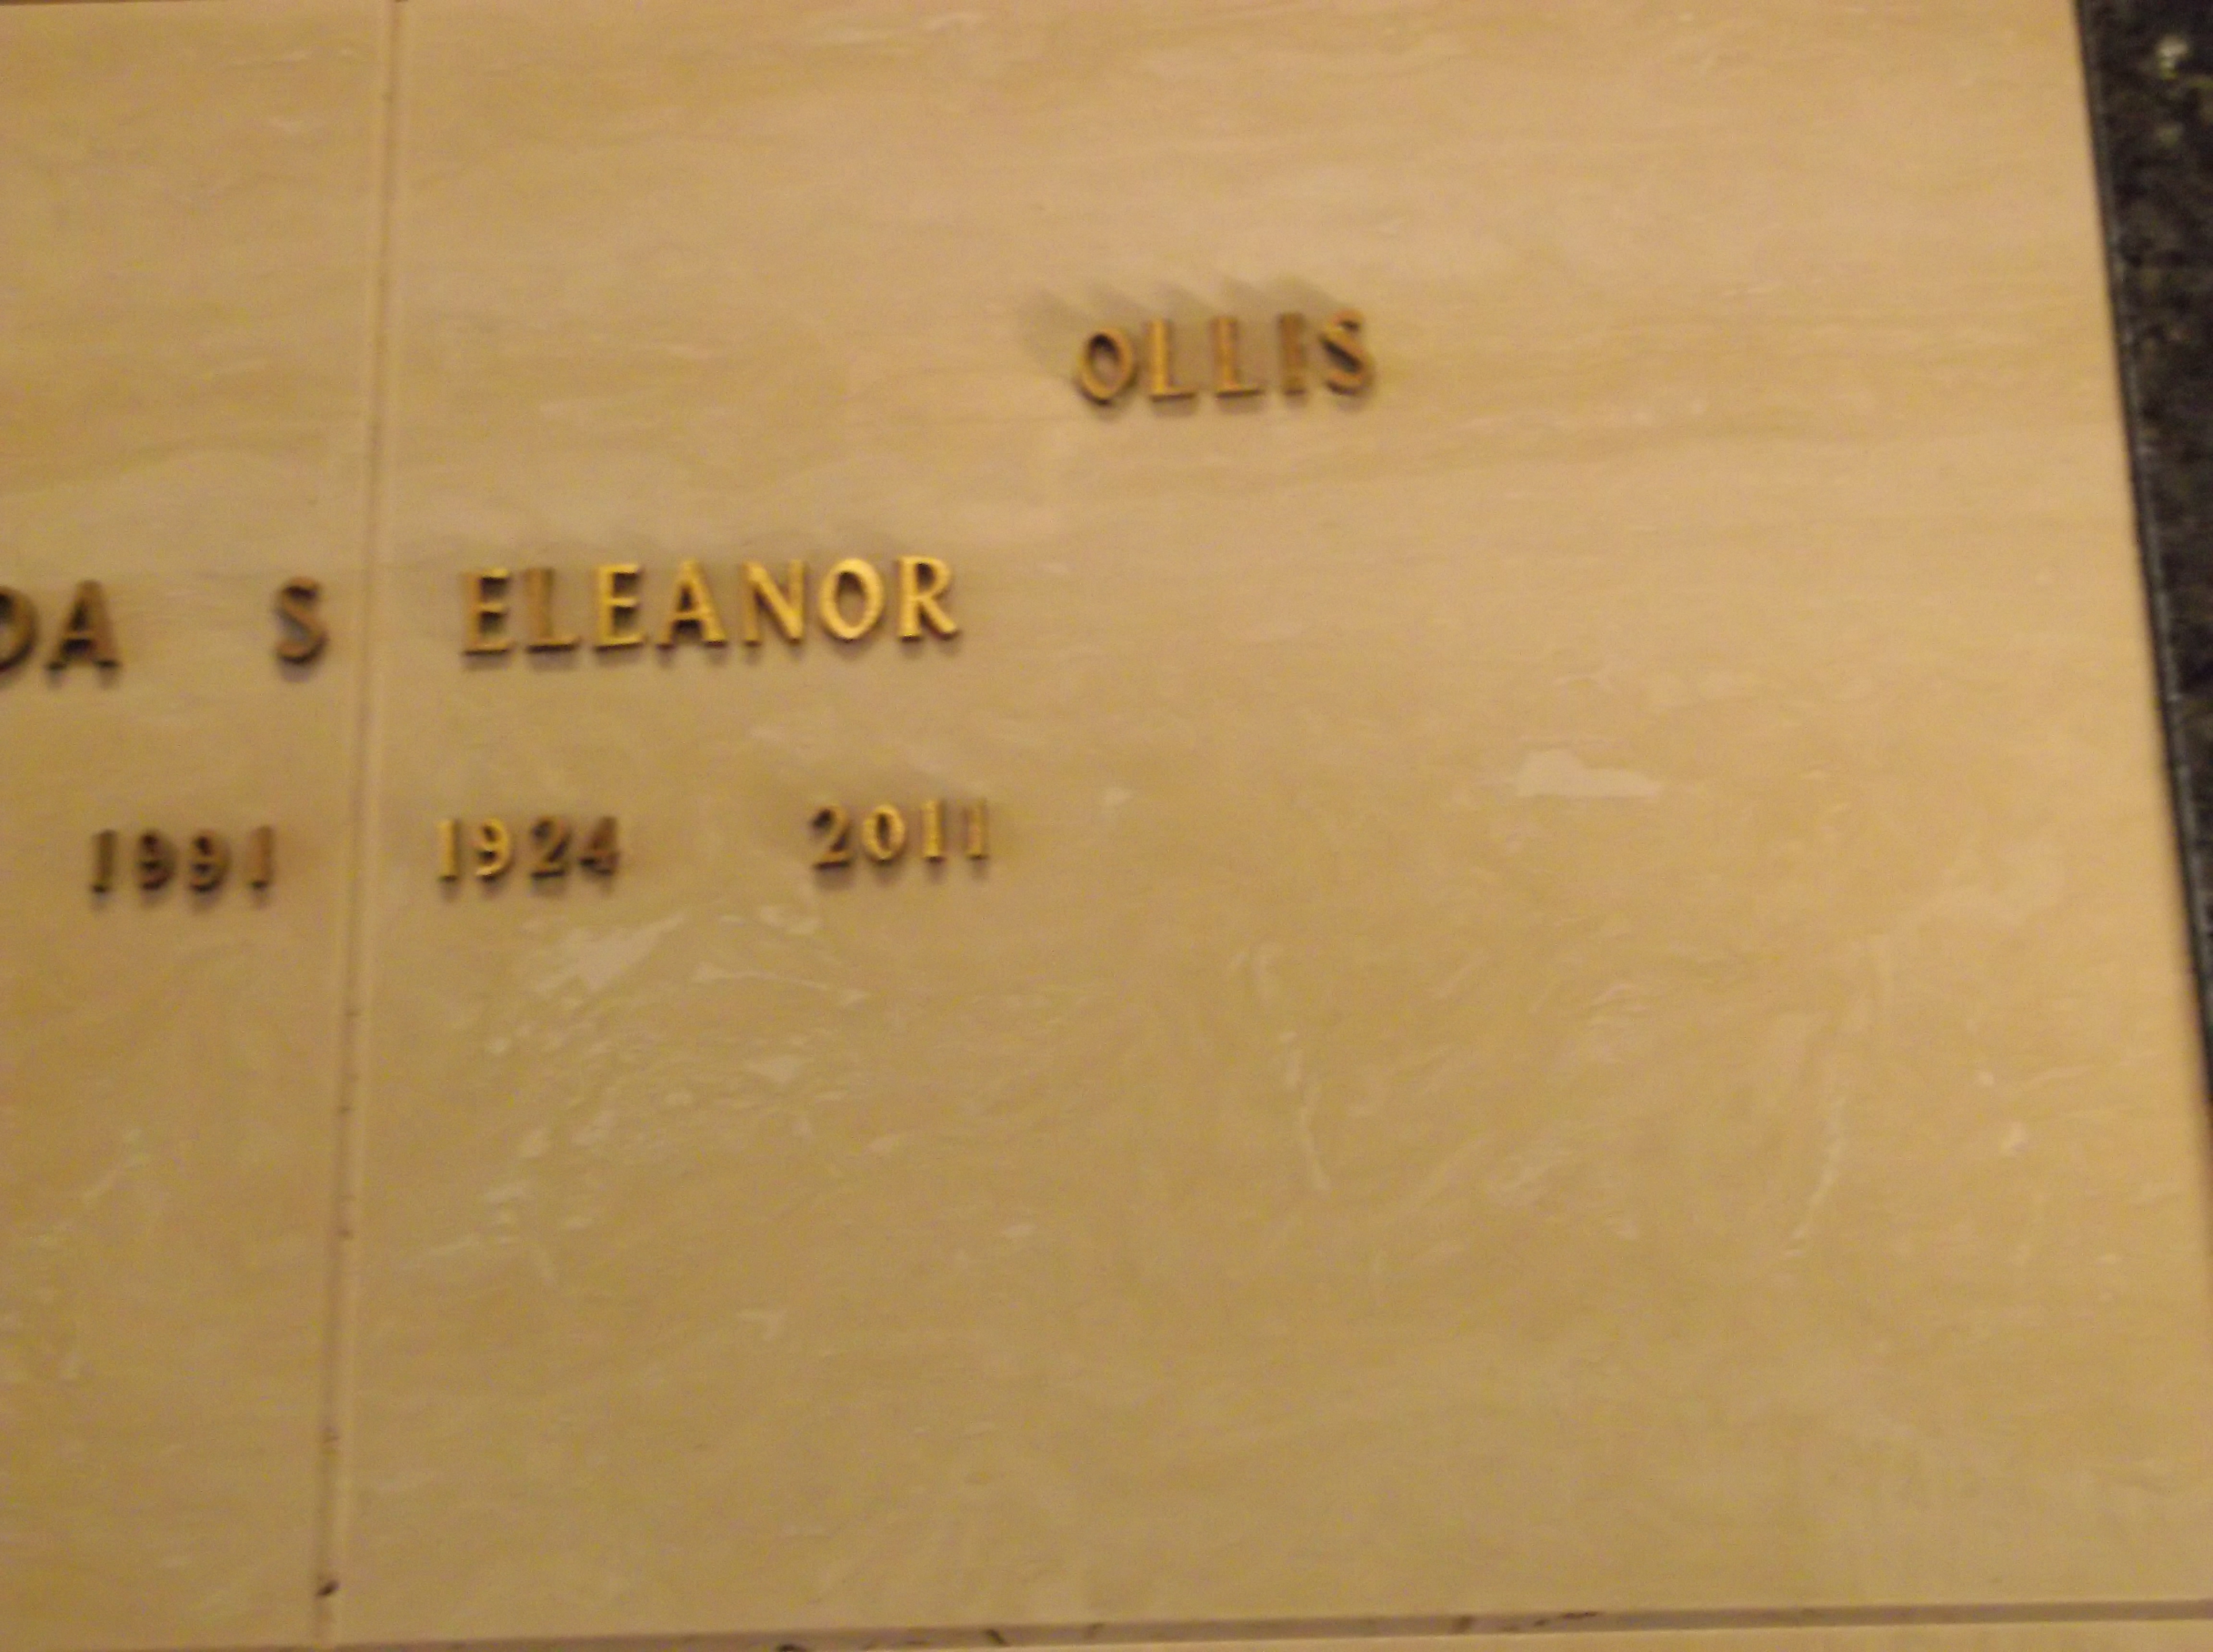 Eleanor Ollis